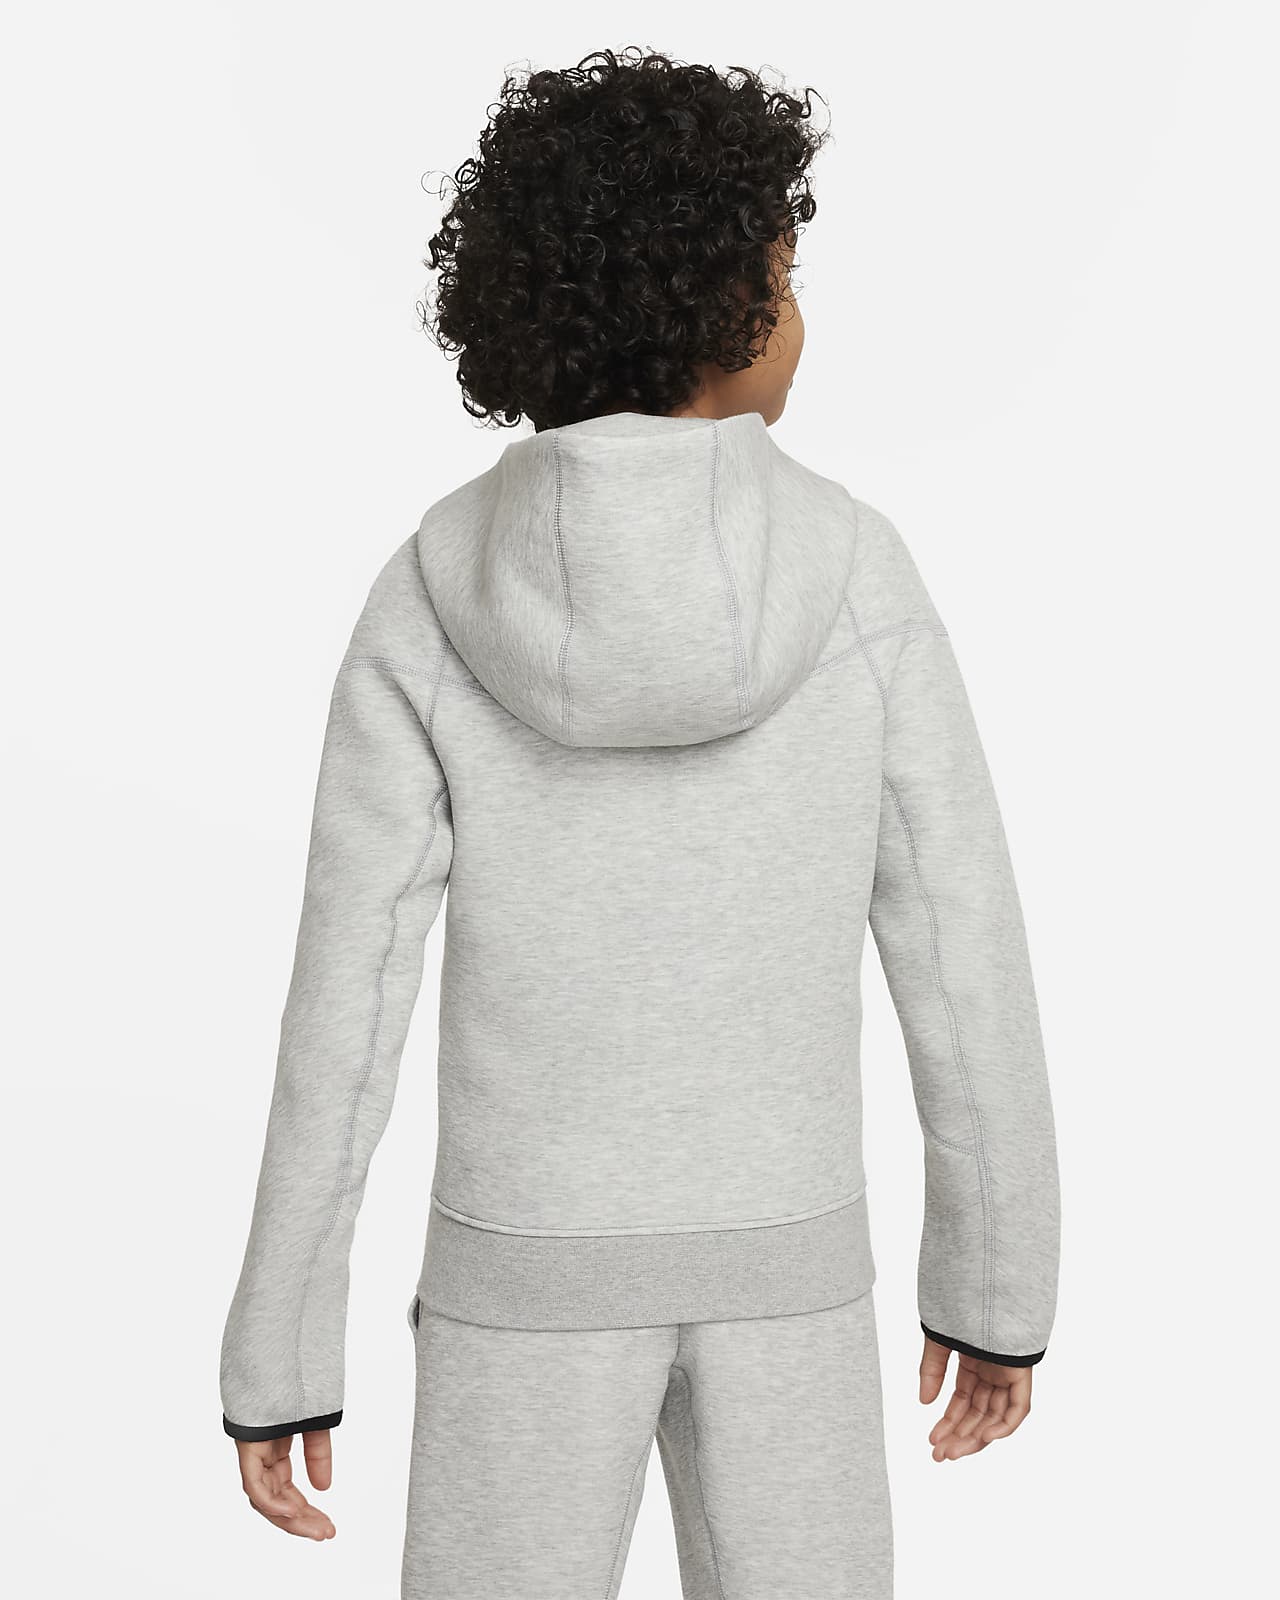 Nike Sportswear Junior Boys' Tech Fleece Full Zip Hoodie Black / Black -  Black